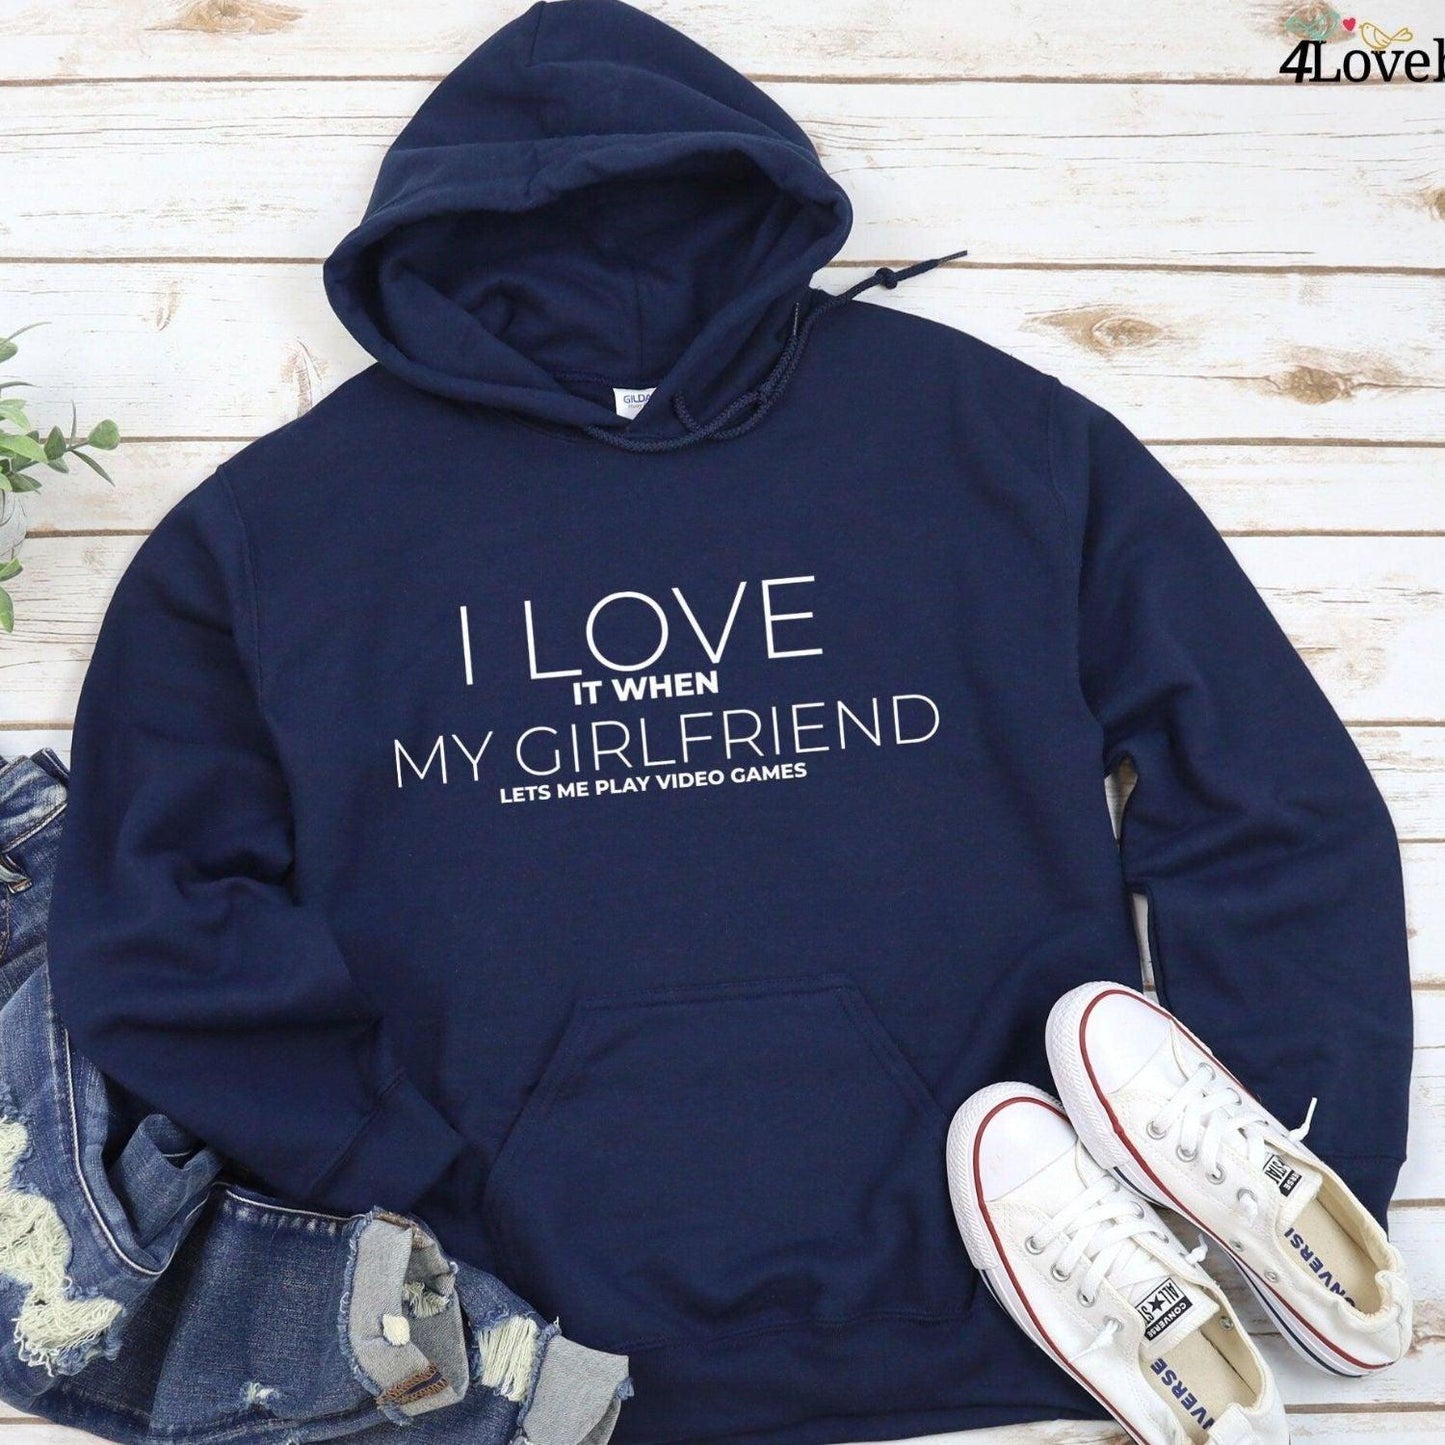 Cute Couple Gift Idea: I Love My Girlfriend/Boyfriend Matching Outfits Set - 4Lovebirds